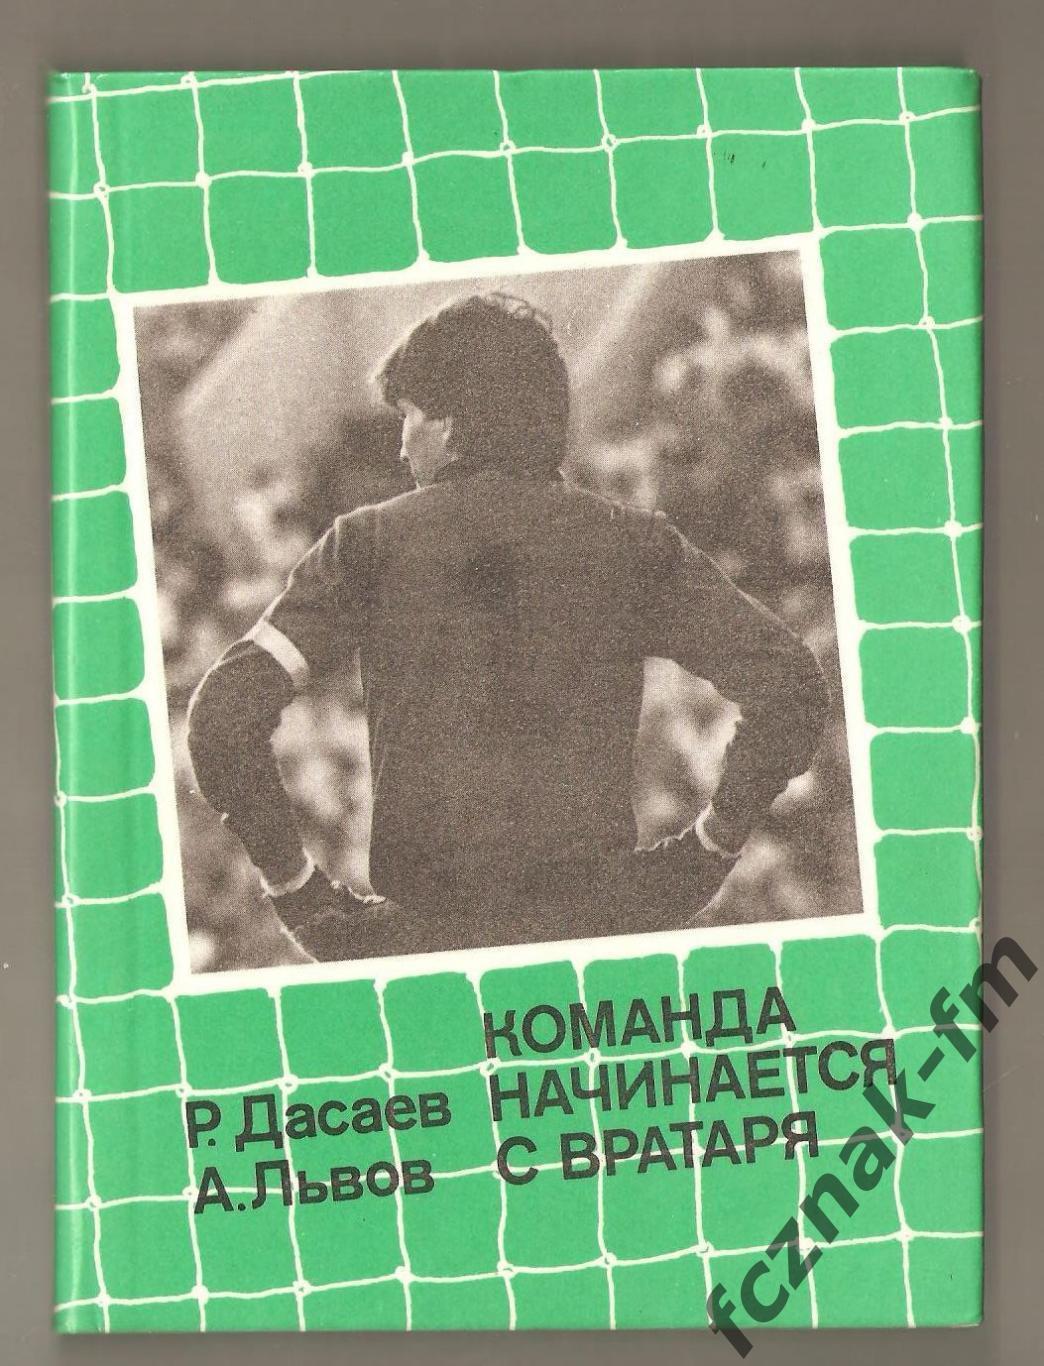 Дасаев Команда начинается с вратаря 1988